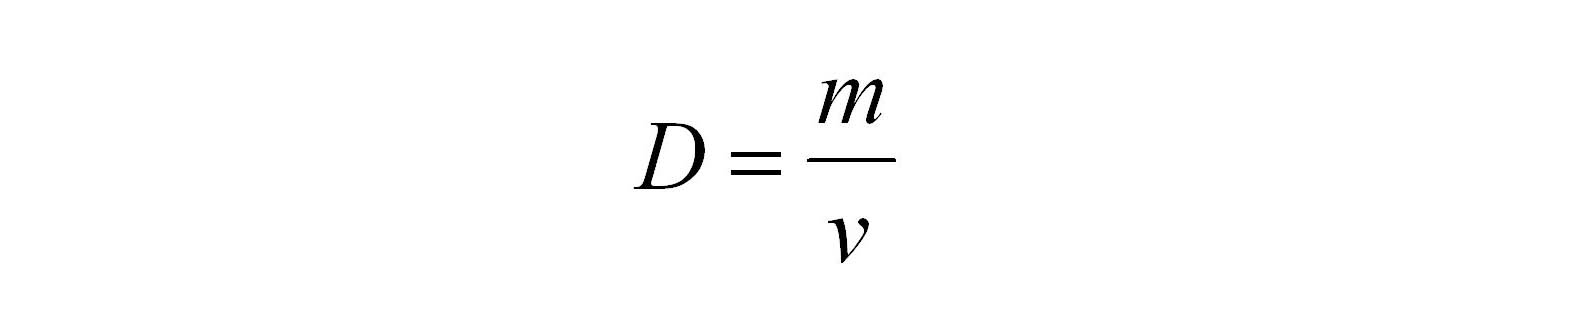 Density-Formula-Manipulation